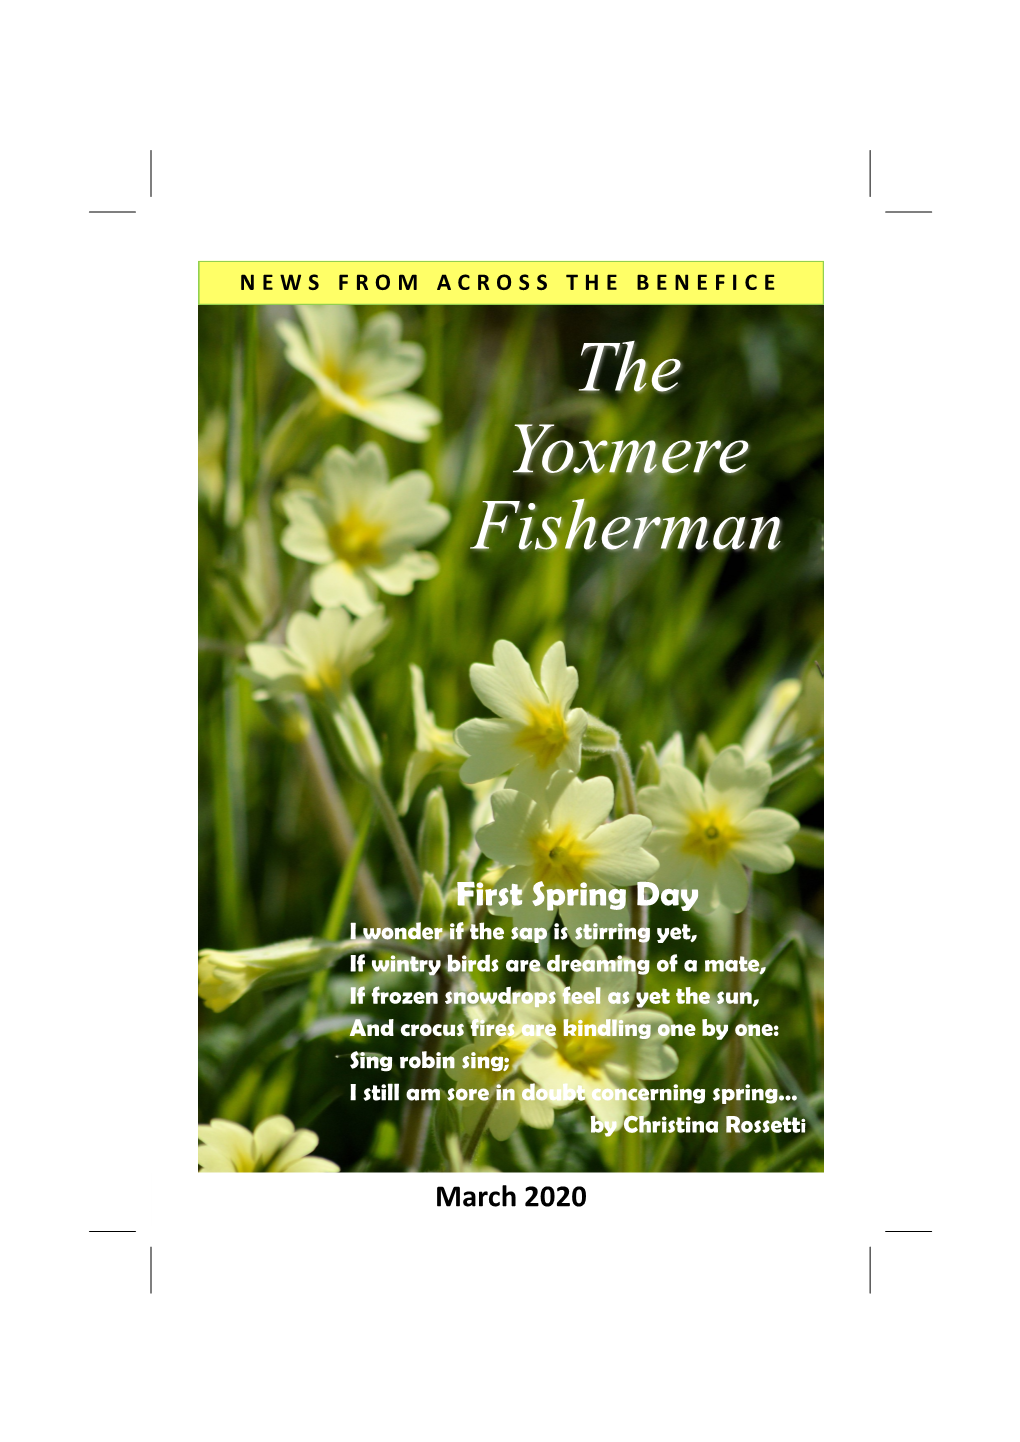 The Yoxmere Fisherman